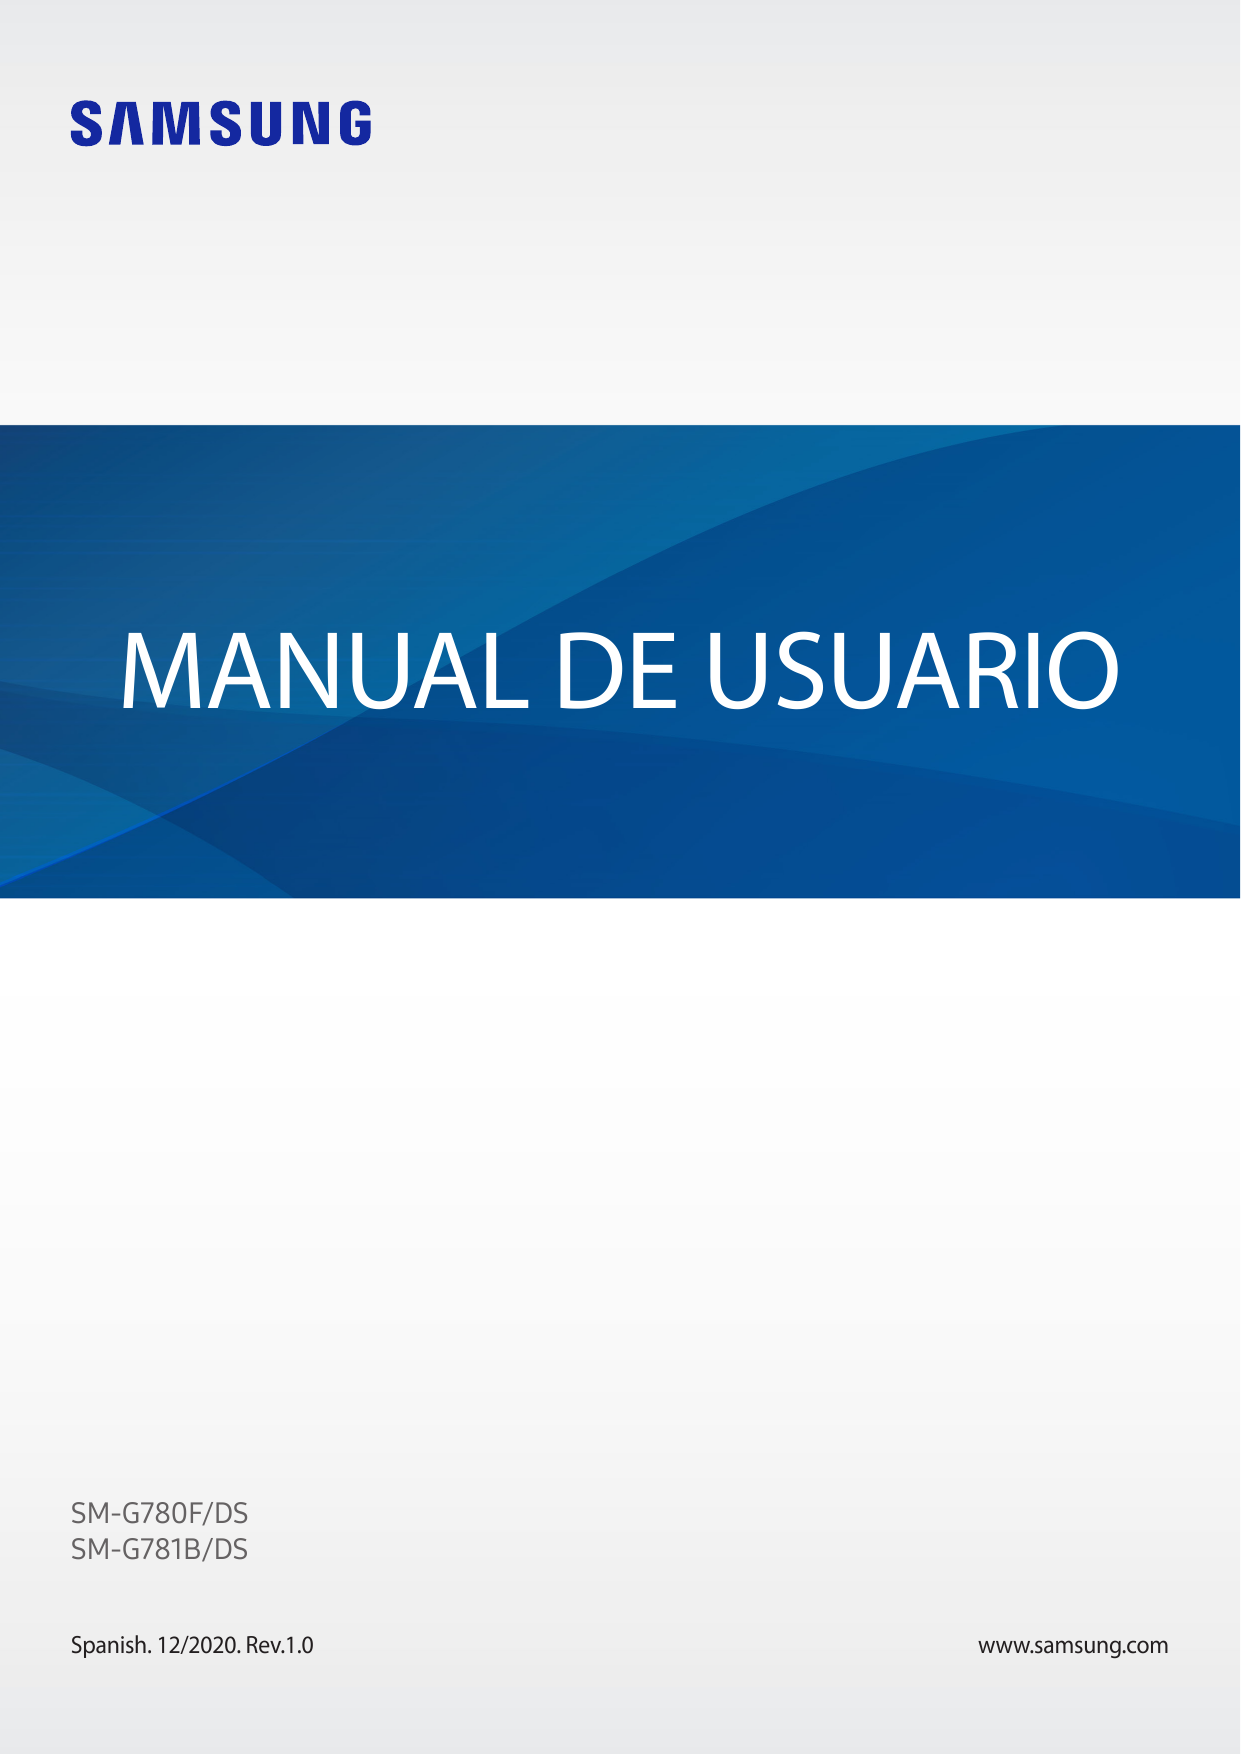 MANUAL DE USUARIOSM-G780F/DSSM-G781B/DSSpanish. 12/2020. Rev.1.0www.samsung.com